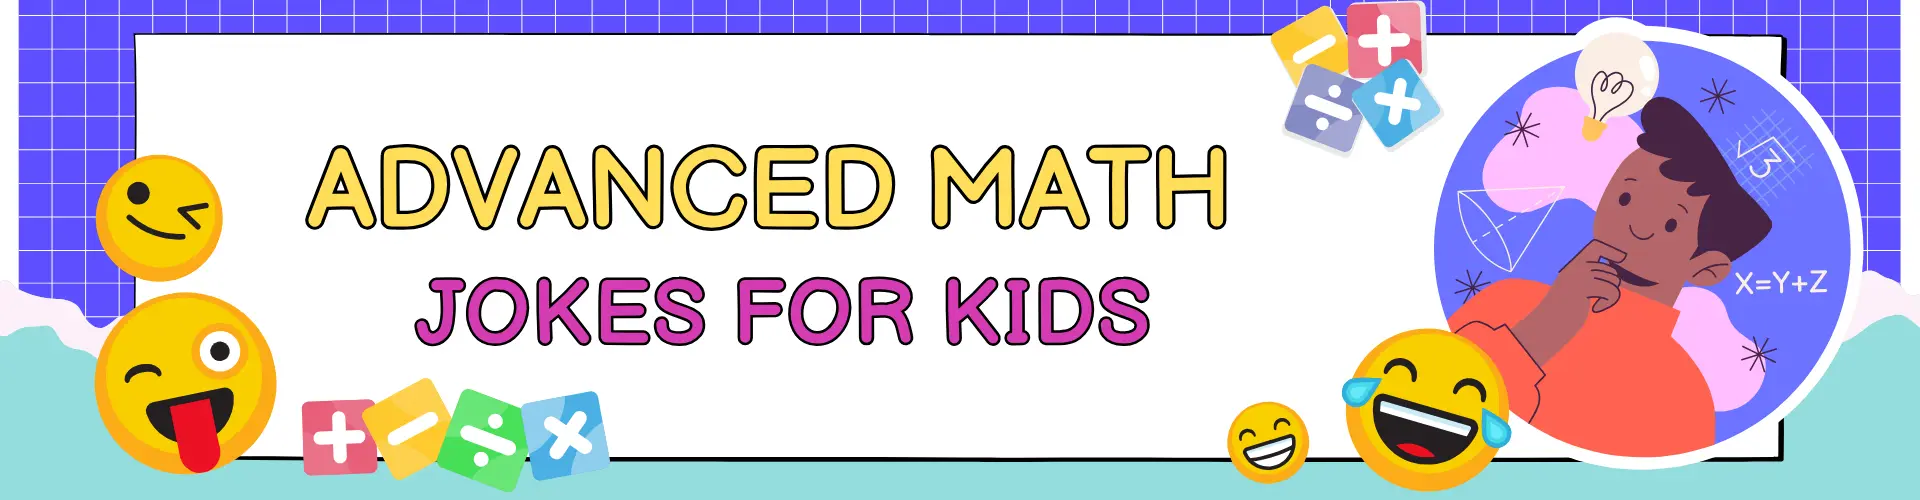 Advanced Math Jokes for Kids